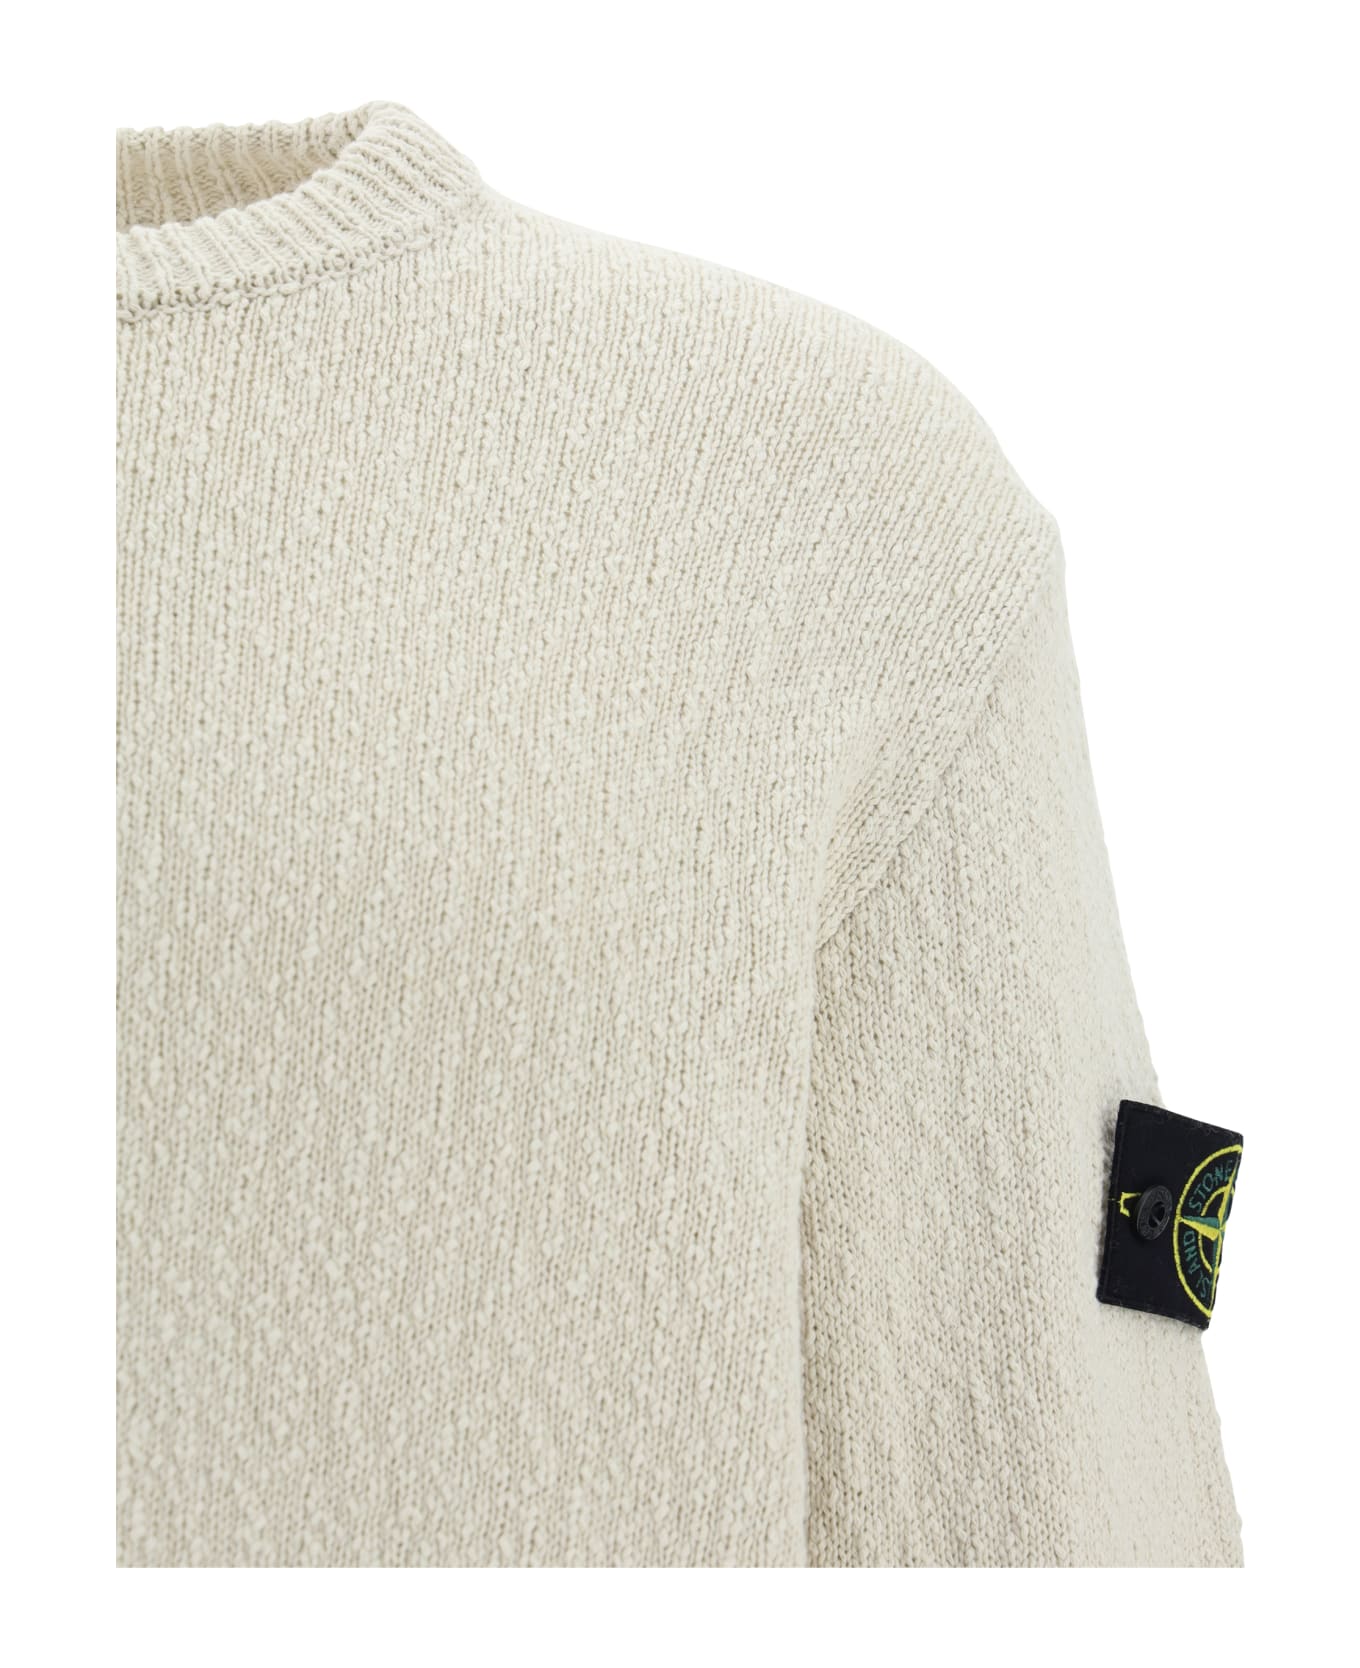 Stone Island Cotton Blend Crew-neck Sweater - Ecru ニットウェア